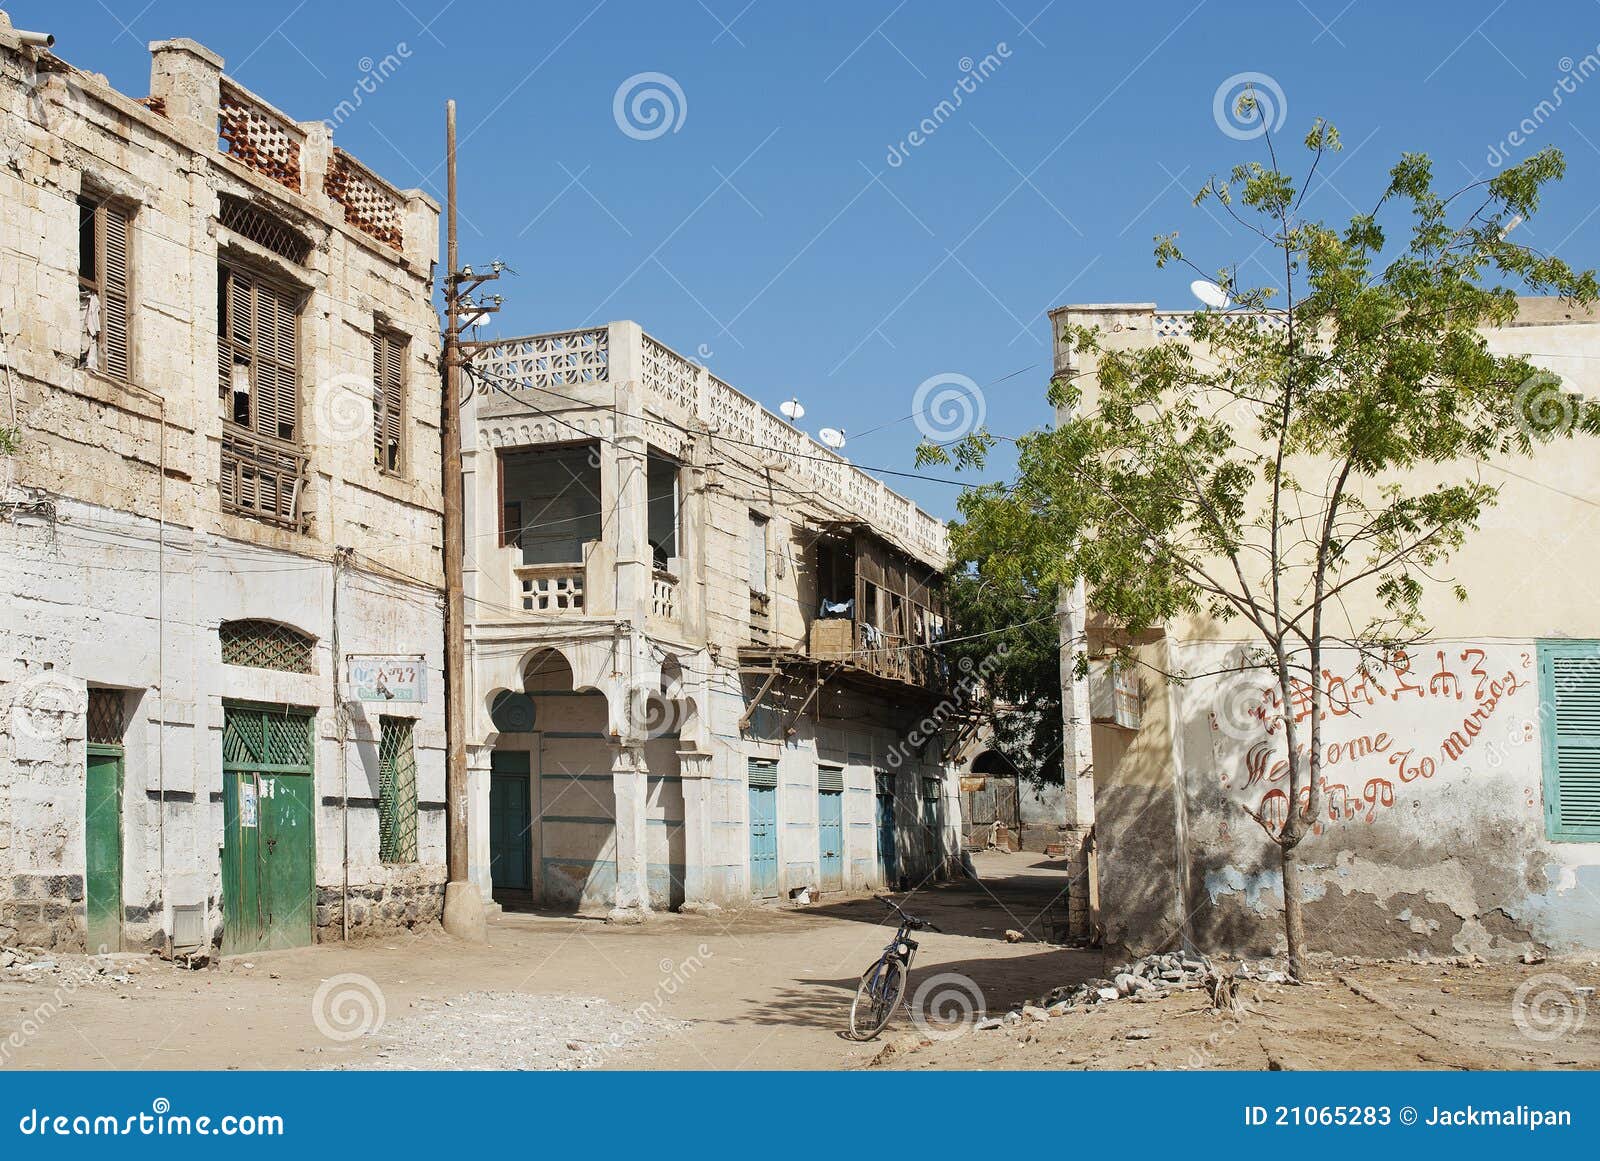 massawa old town in eritrea